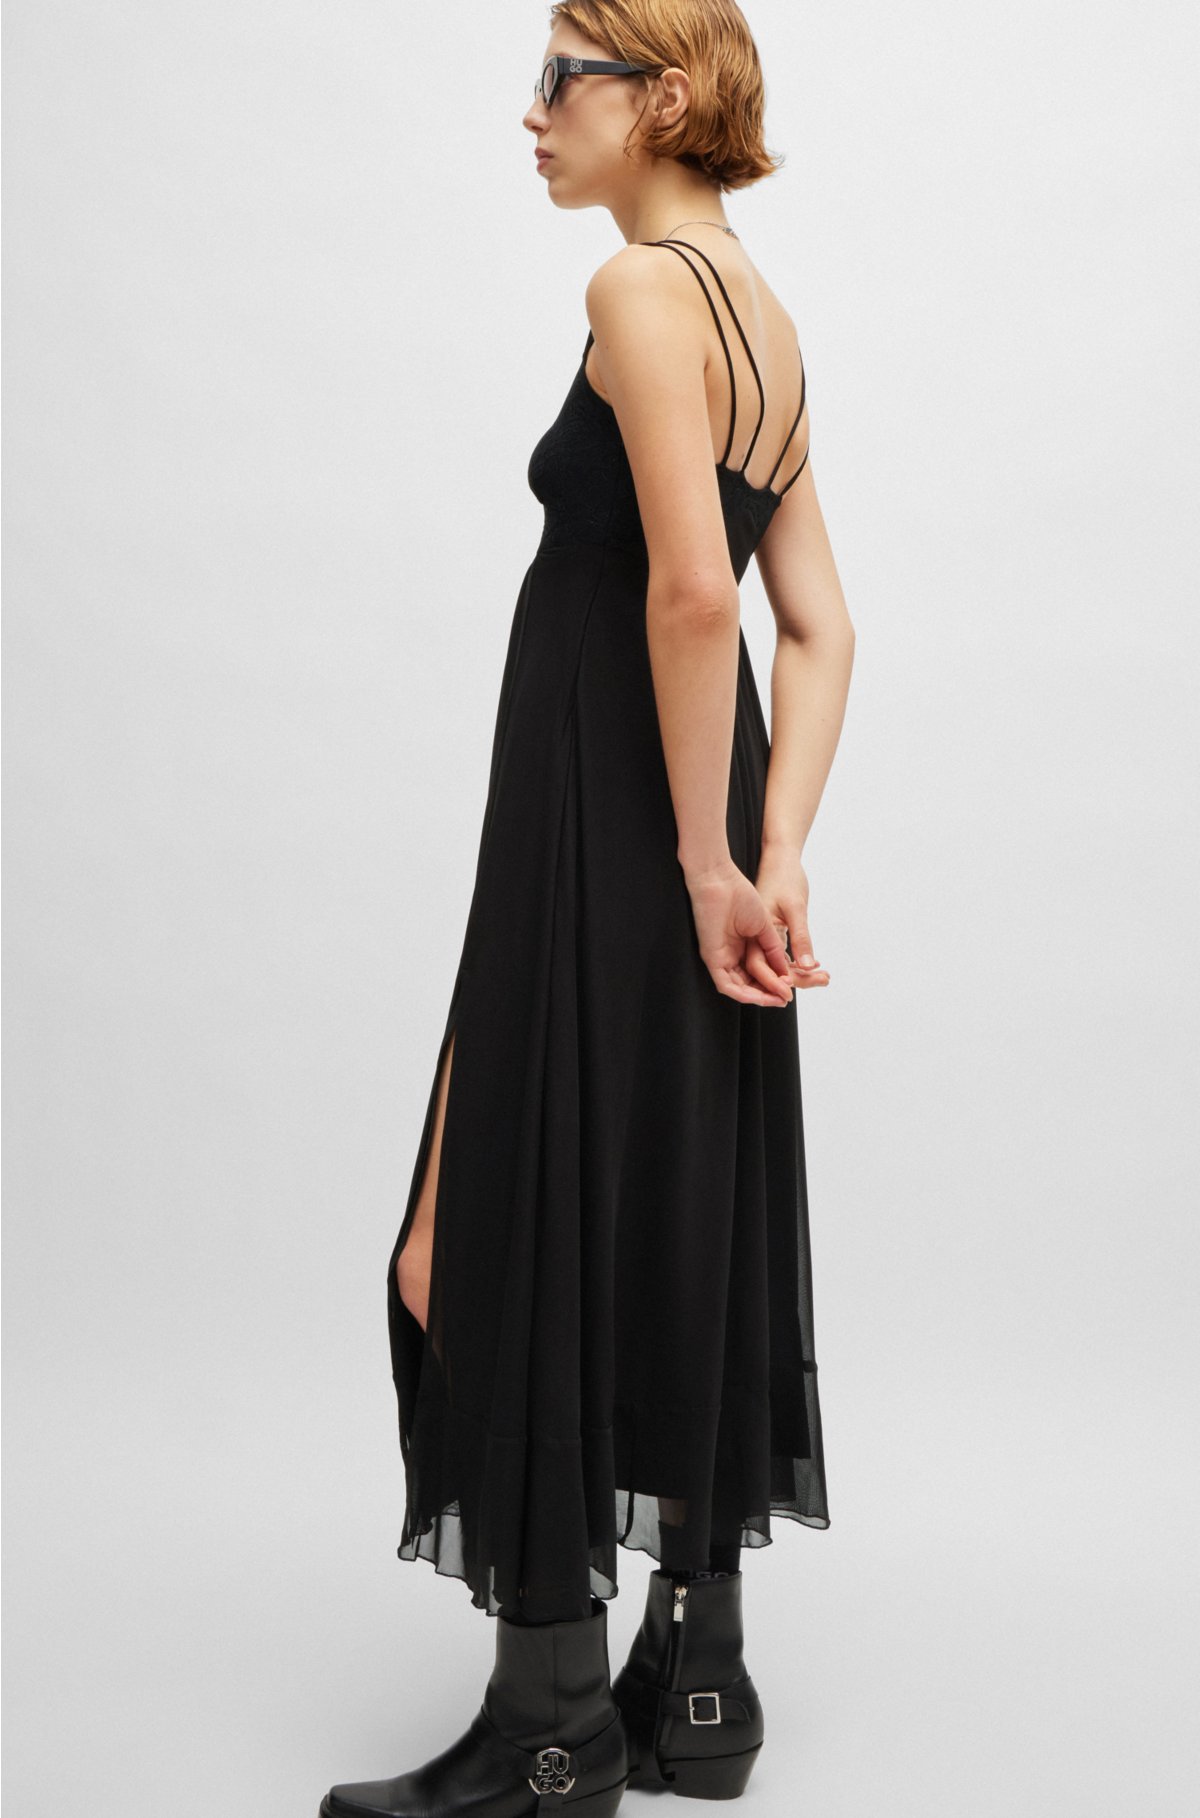 Lace-detail dress with spaghetti straps, Black